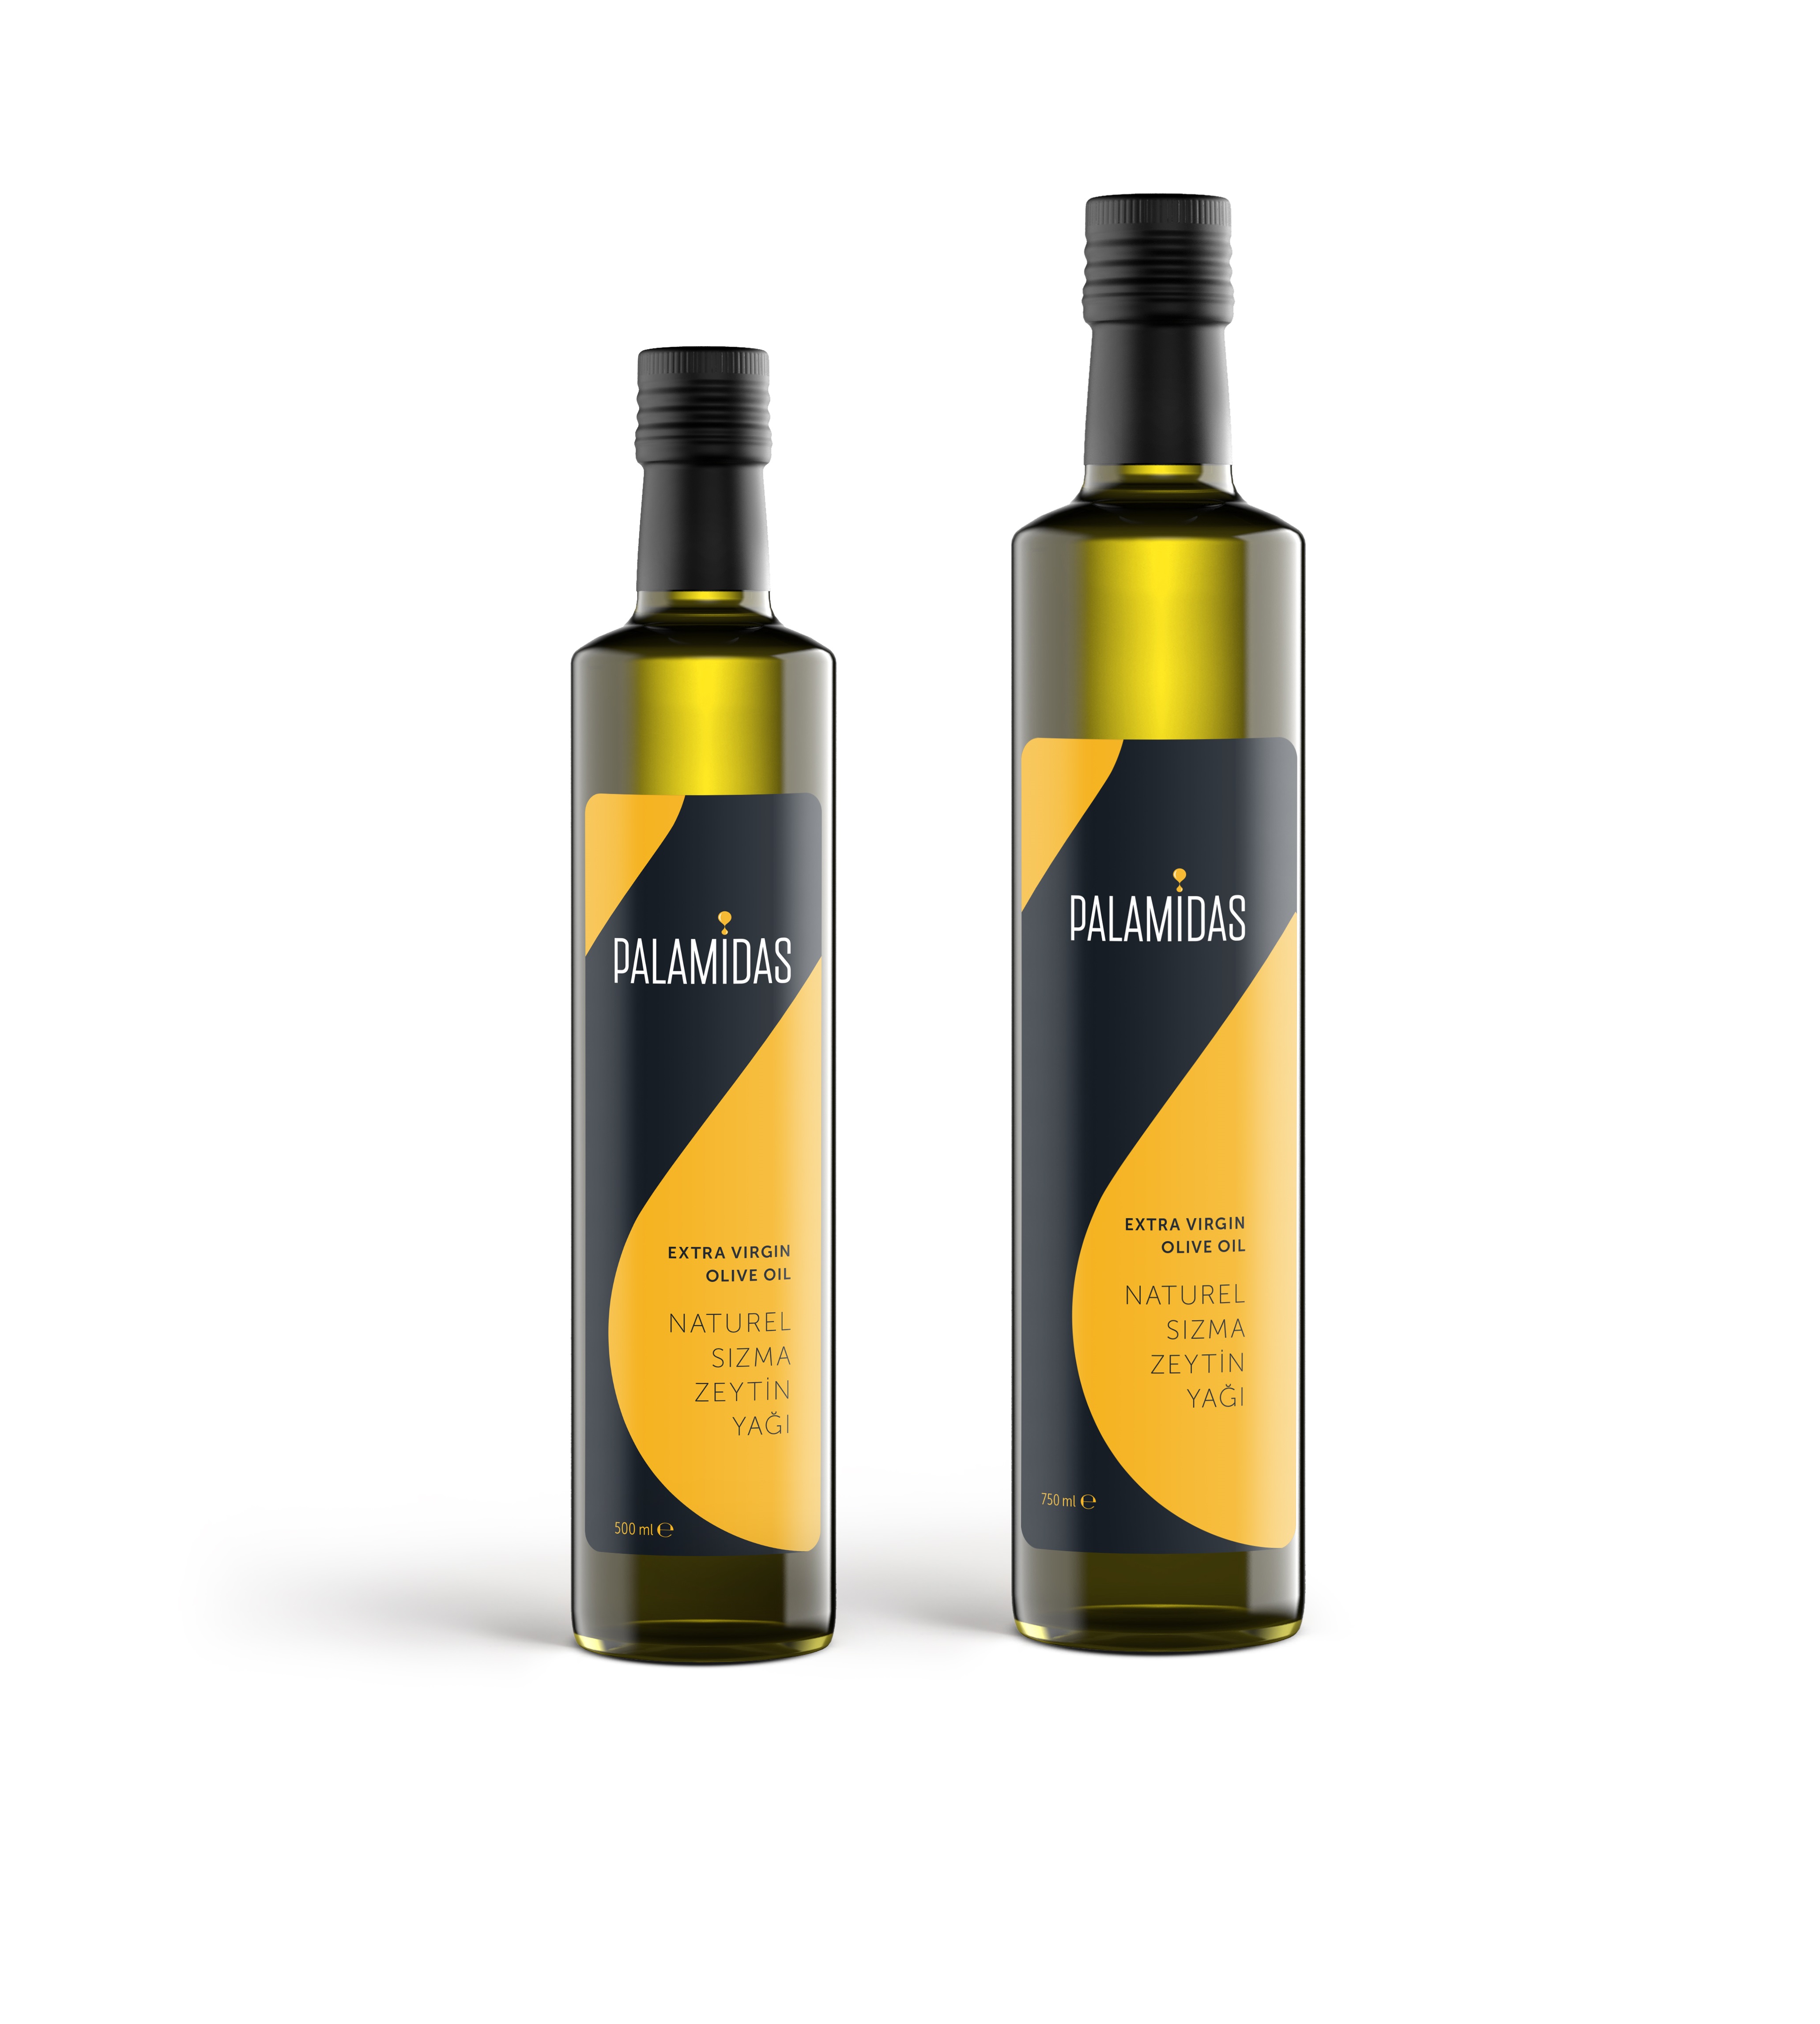 Турецкое оливковое масло. Terra Delyssa 750мл Pure Olive Oil с/б. Турецкое оливковое масло sirim. Оливковое масло первого холодного отжима. Оливковое масло первого отжима турецкое.